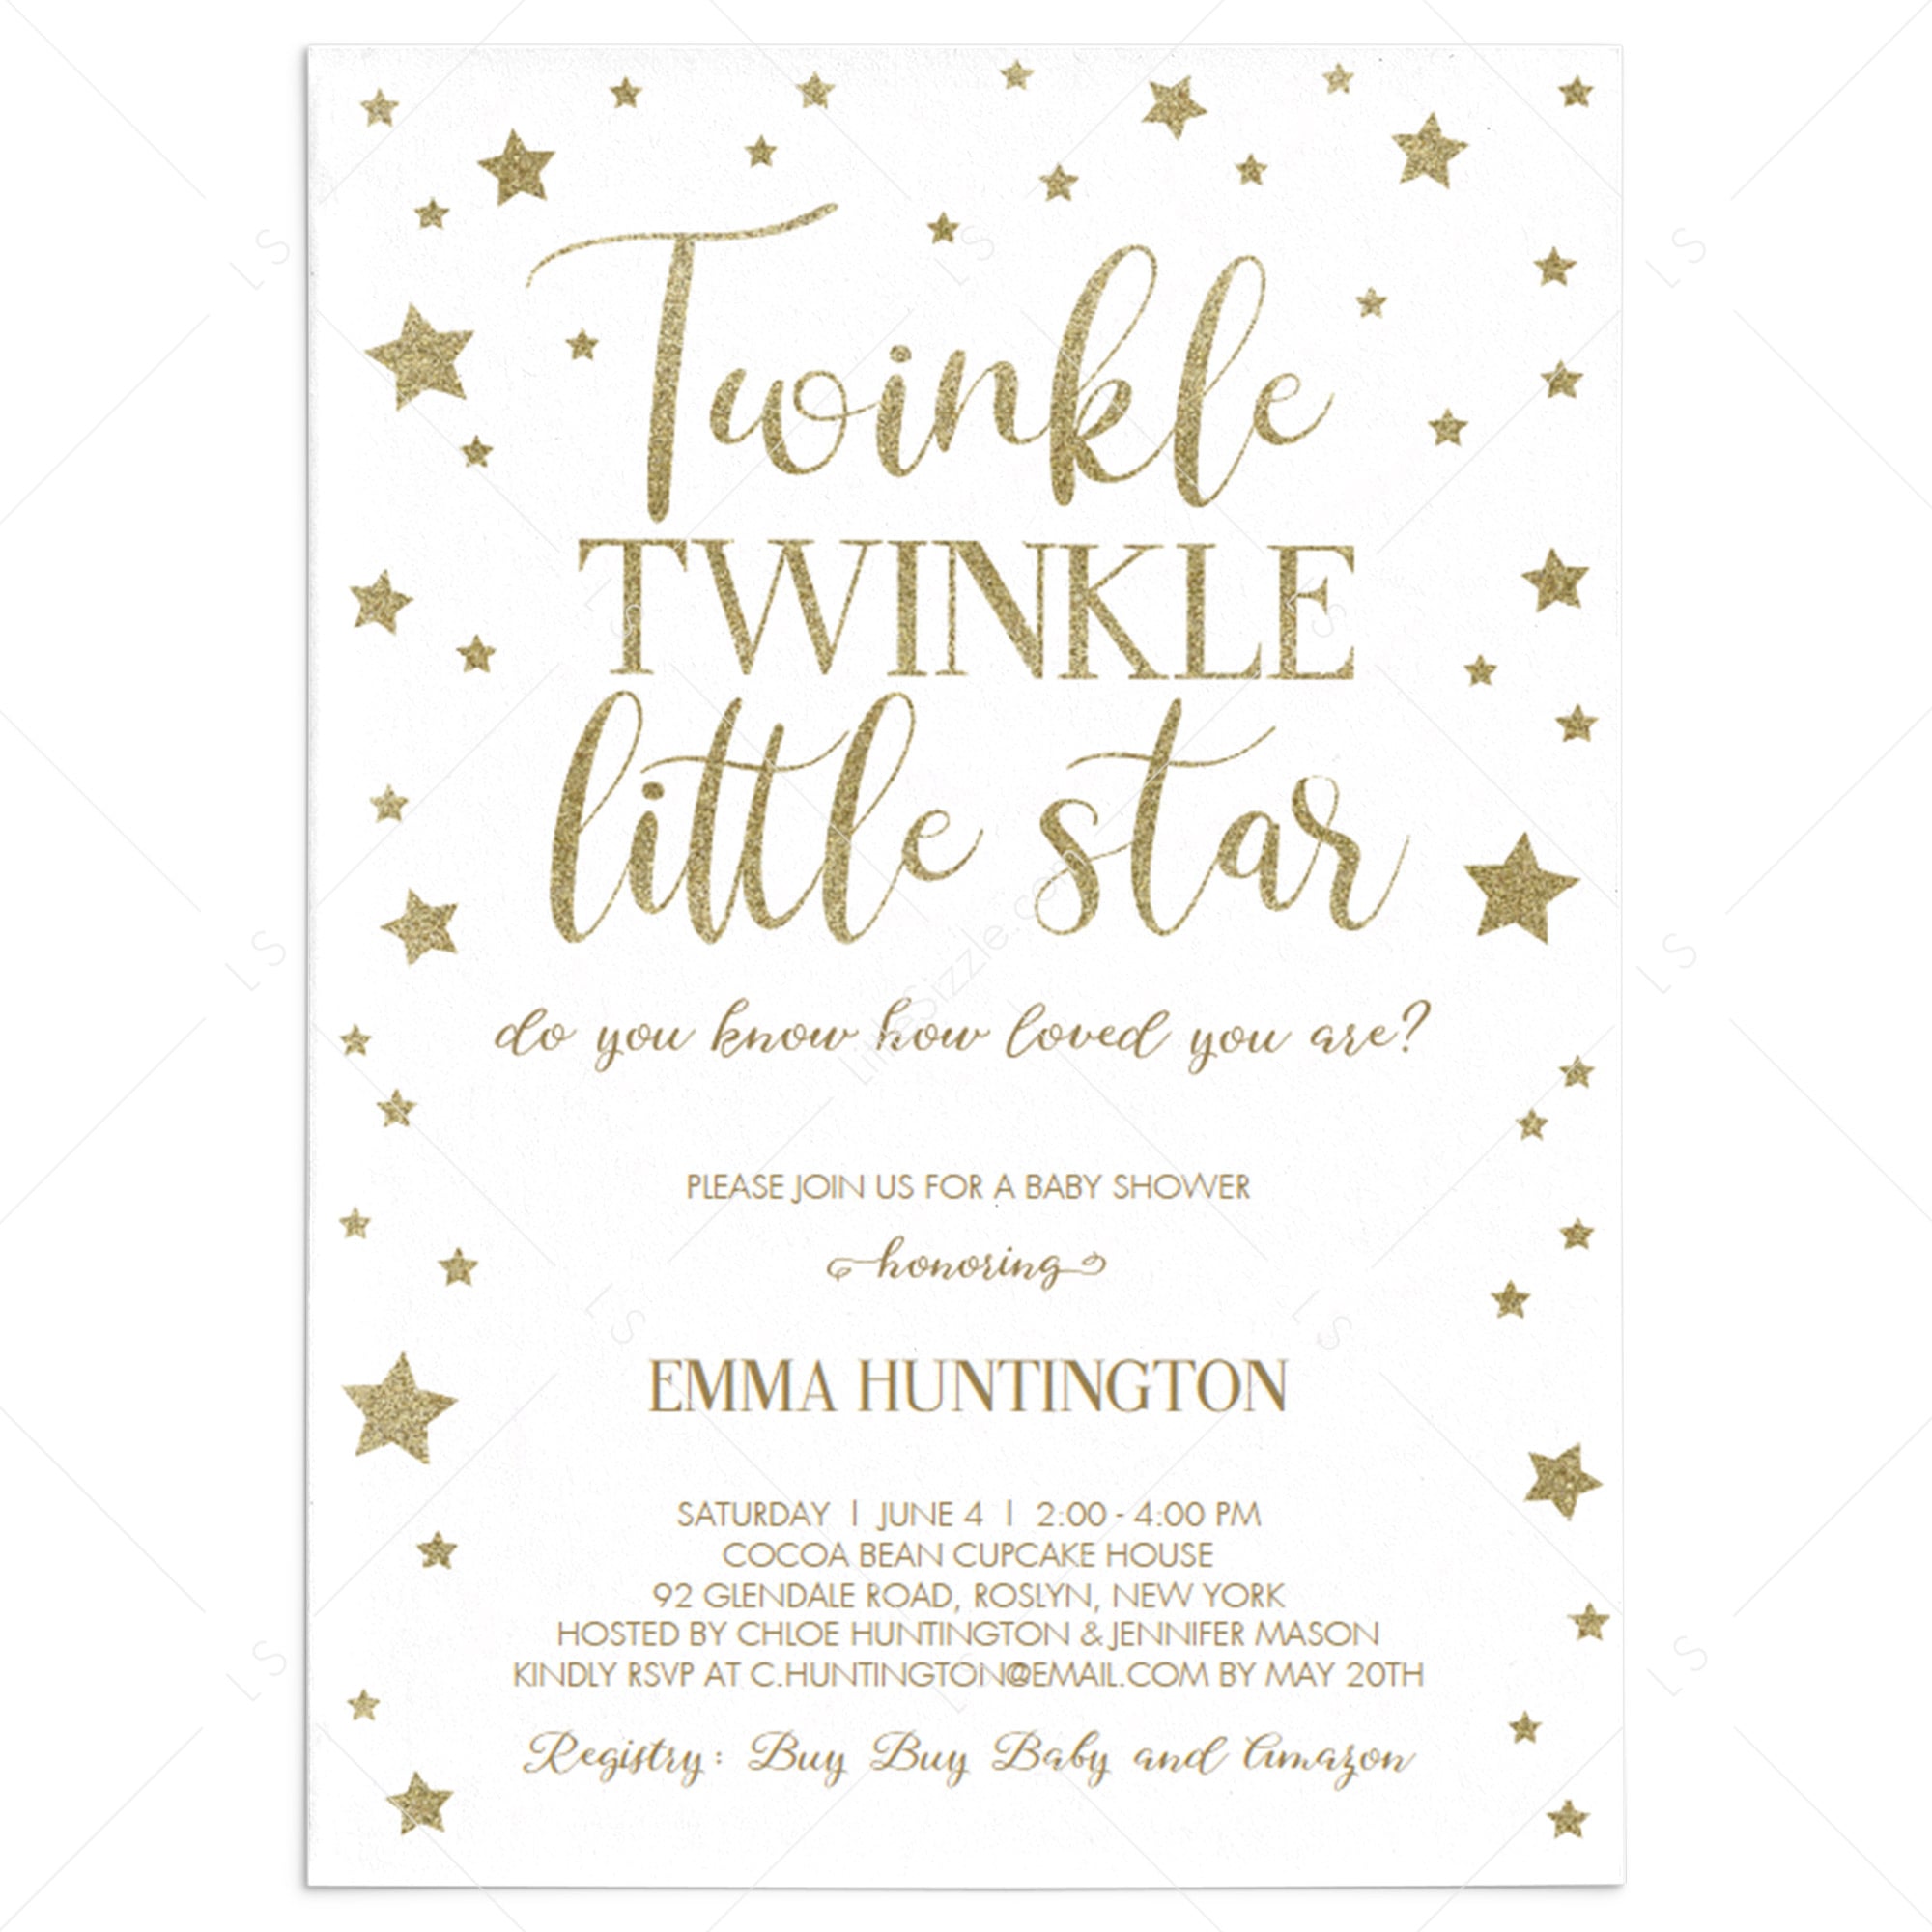 Twinkle Twinkle Little Star Baby Shower Invitations Free Template